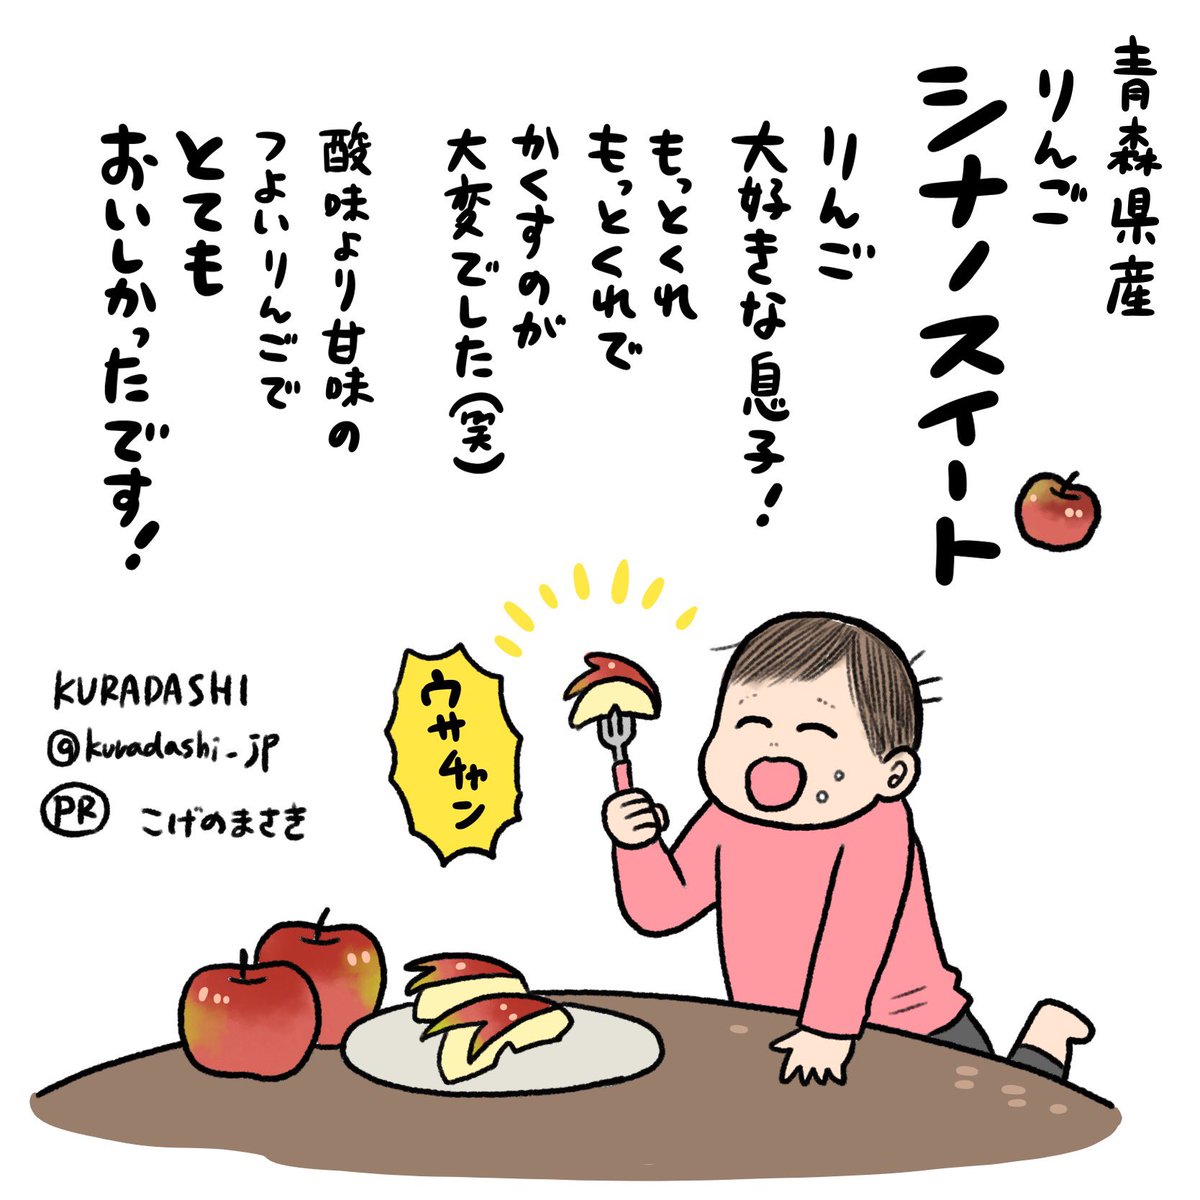 KURADASHIさまのアンバサダー3回目、今回は青森県産シナノスイートをいただきました🍎🍎息子も大好きなりんご、新鮮でとても美味しかったです!
フードロス削減に貢献できる通販サイトKURADASHIはこちら!
https://t.co/PGVKLSBorb
#KURADASHI
#KURADASHI_PR
#KURADASHIアンバサダー 